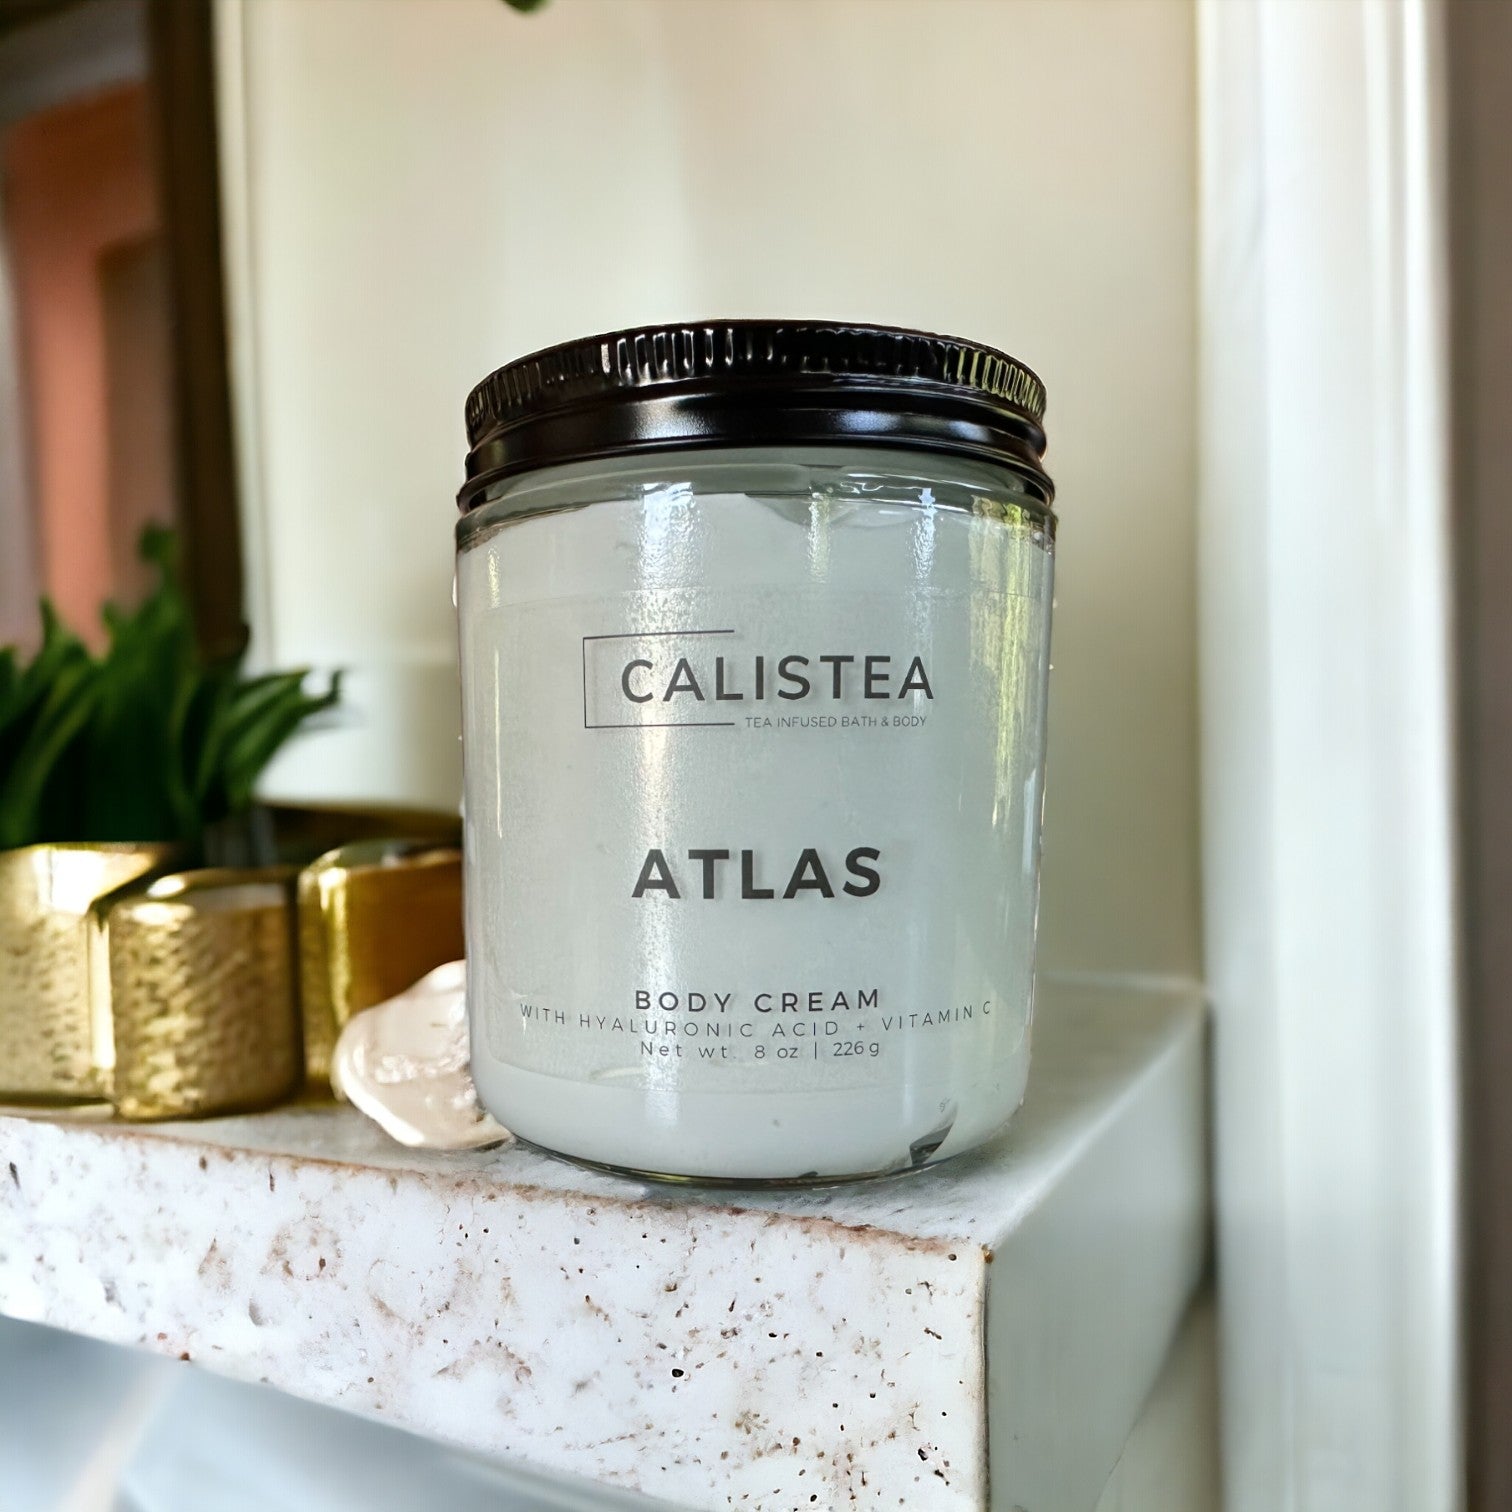 Atlas - Calistea8 oz by volume